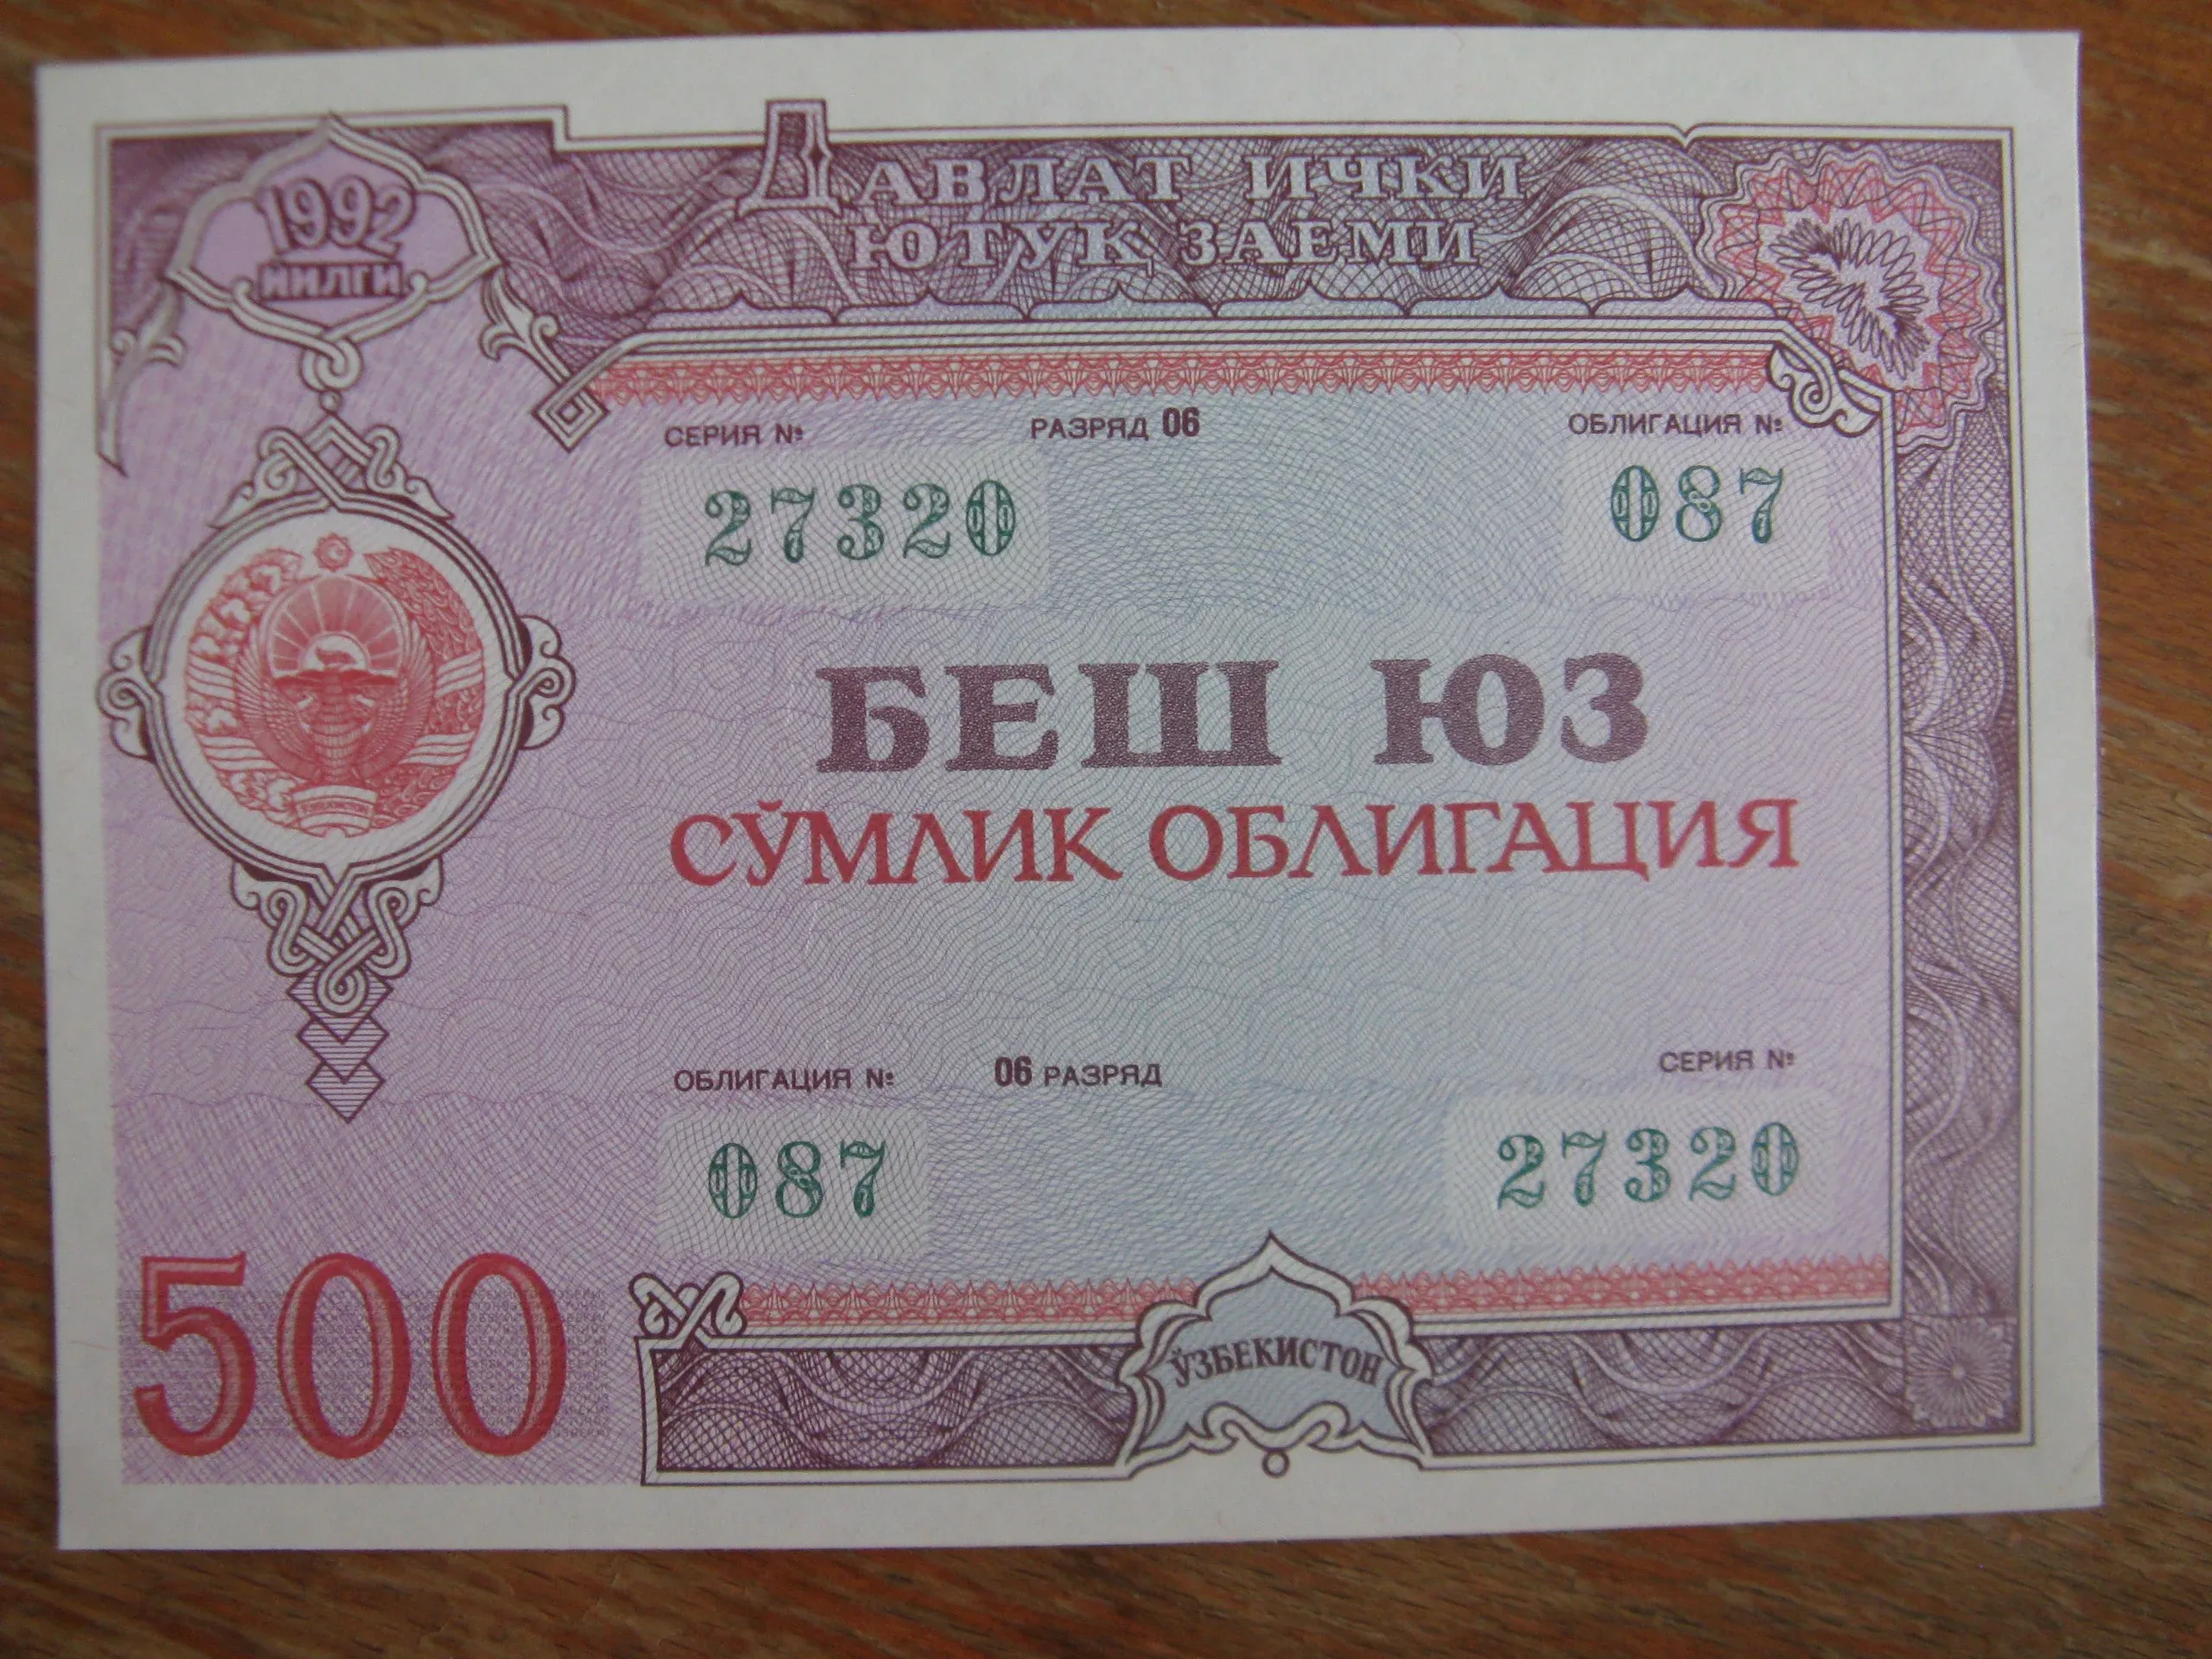 500 Сум Узбекистан. Облигации государственного займа 1992 года. 500 Сум в рублях. Узбекистан 10 сум 1992 года. 1 рубль сум узбекистан